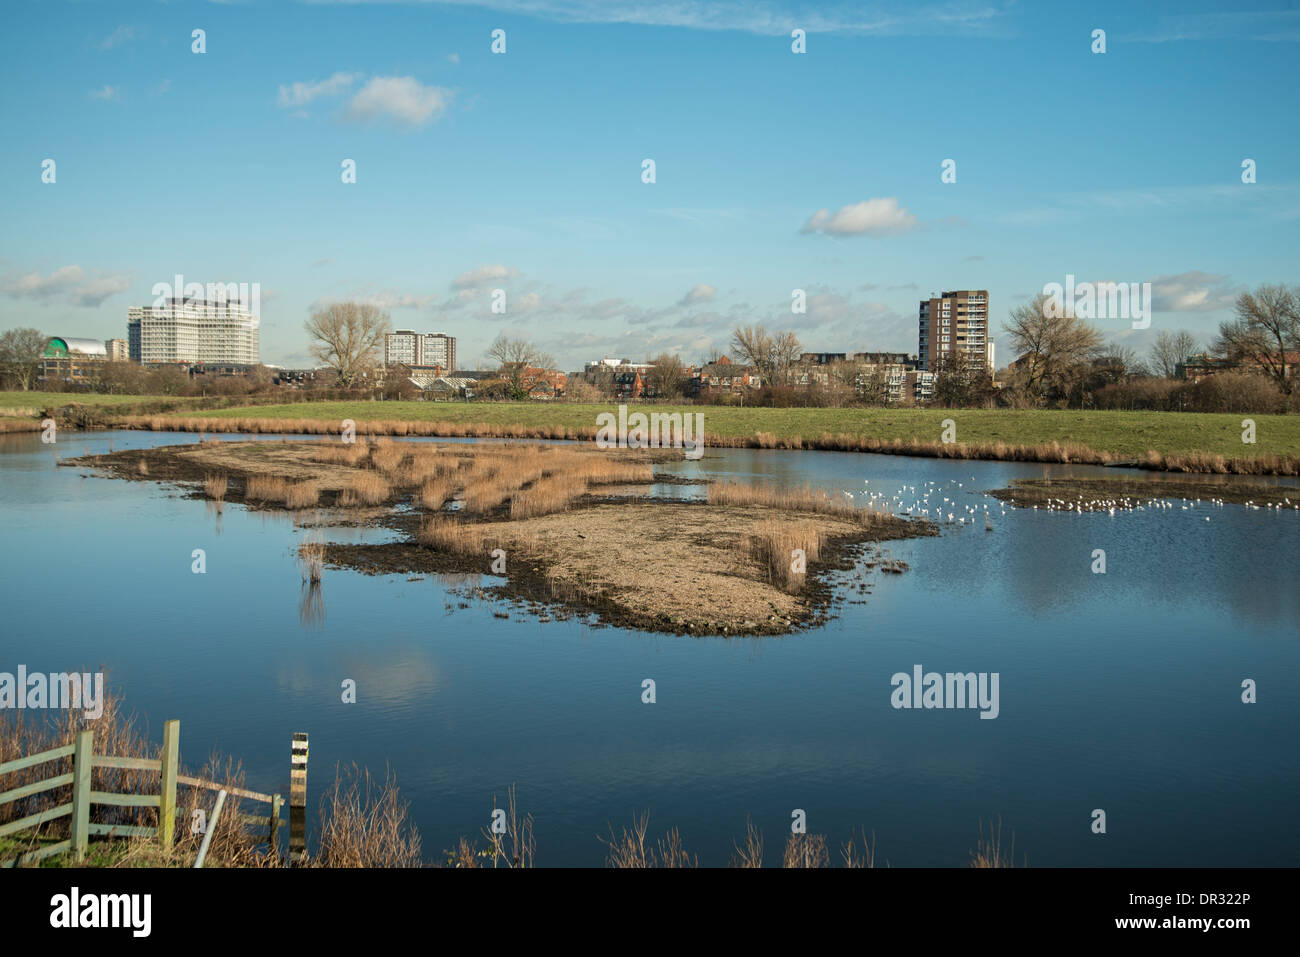 London Wetland Centre, Barnes, Surrey, England Stockfoto